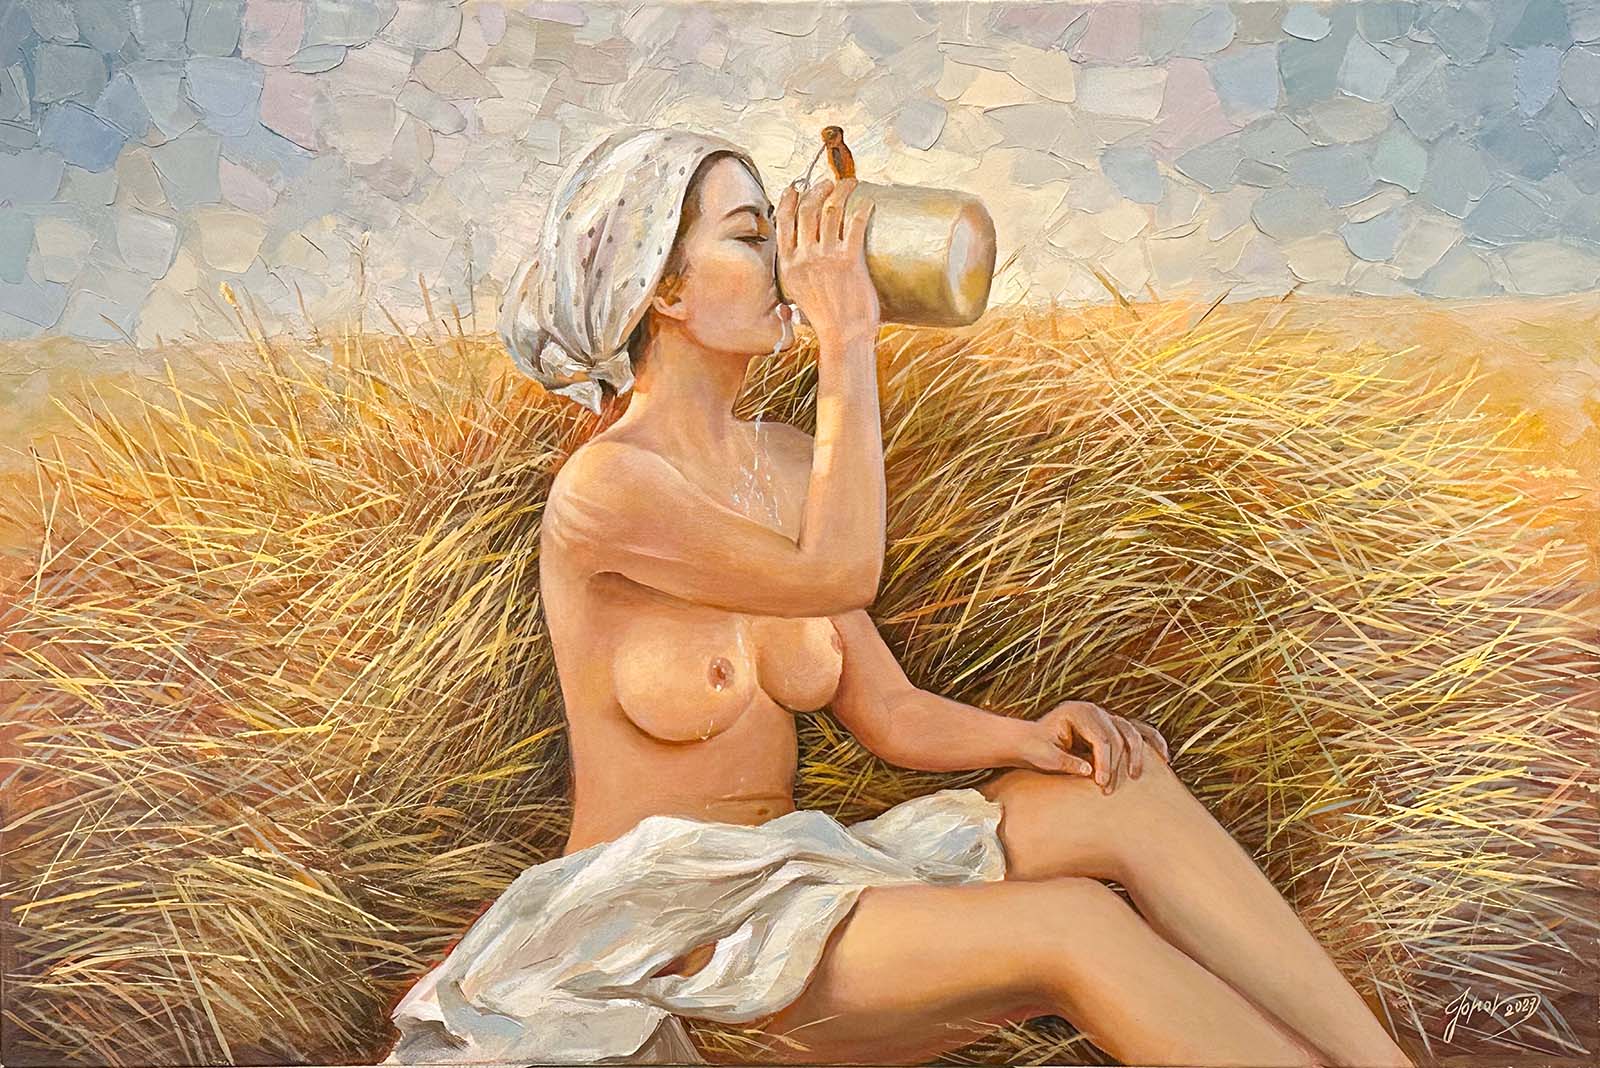 Contemporary Art. Title: Summer Heat, Oil on Canvas, 24 x 36 in by artist Mykola Yurov.